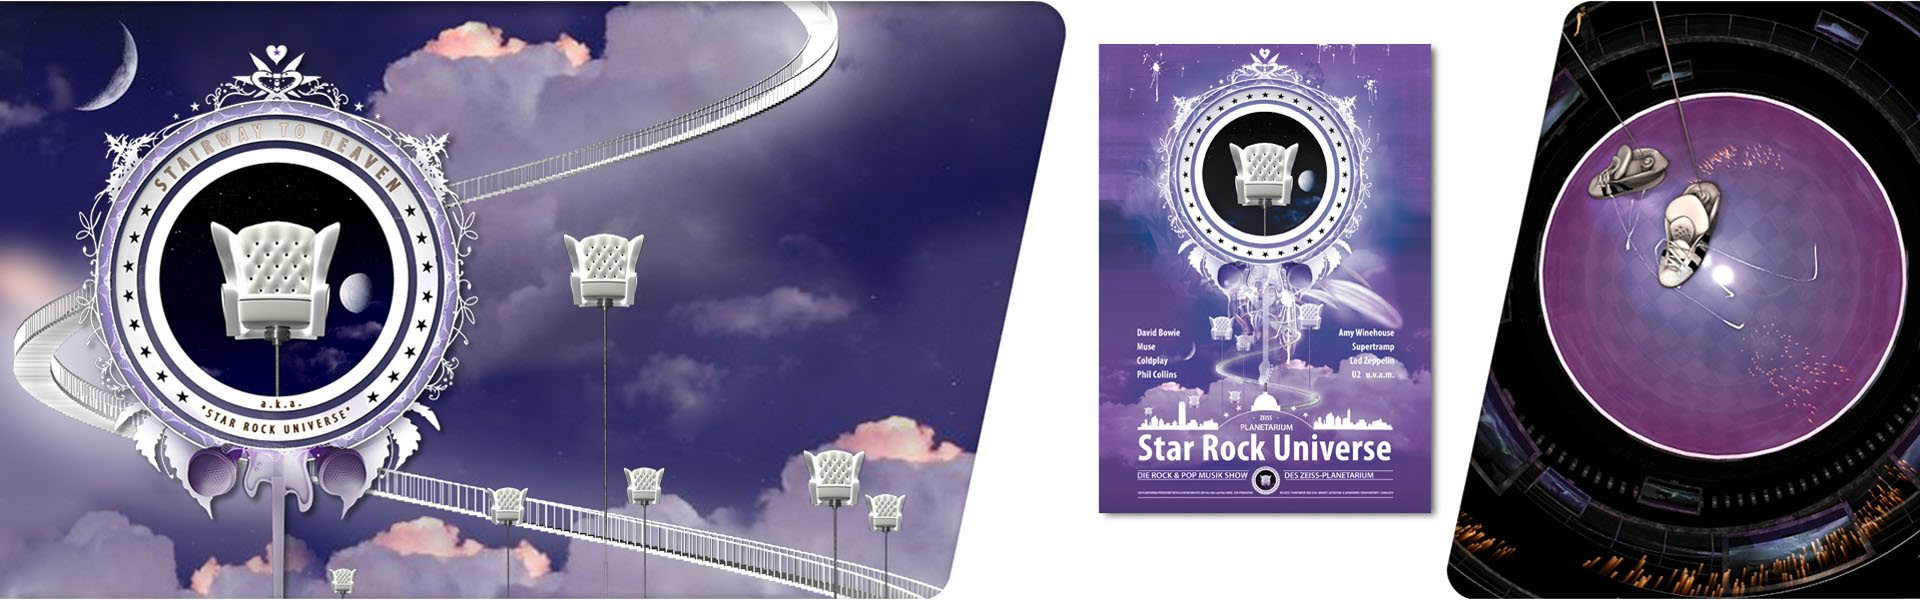 Star Rock Universe